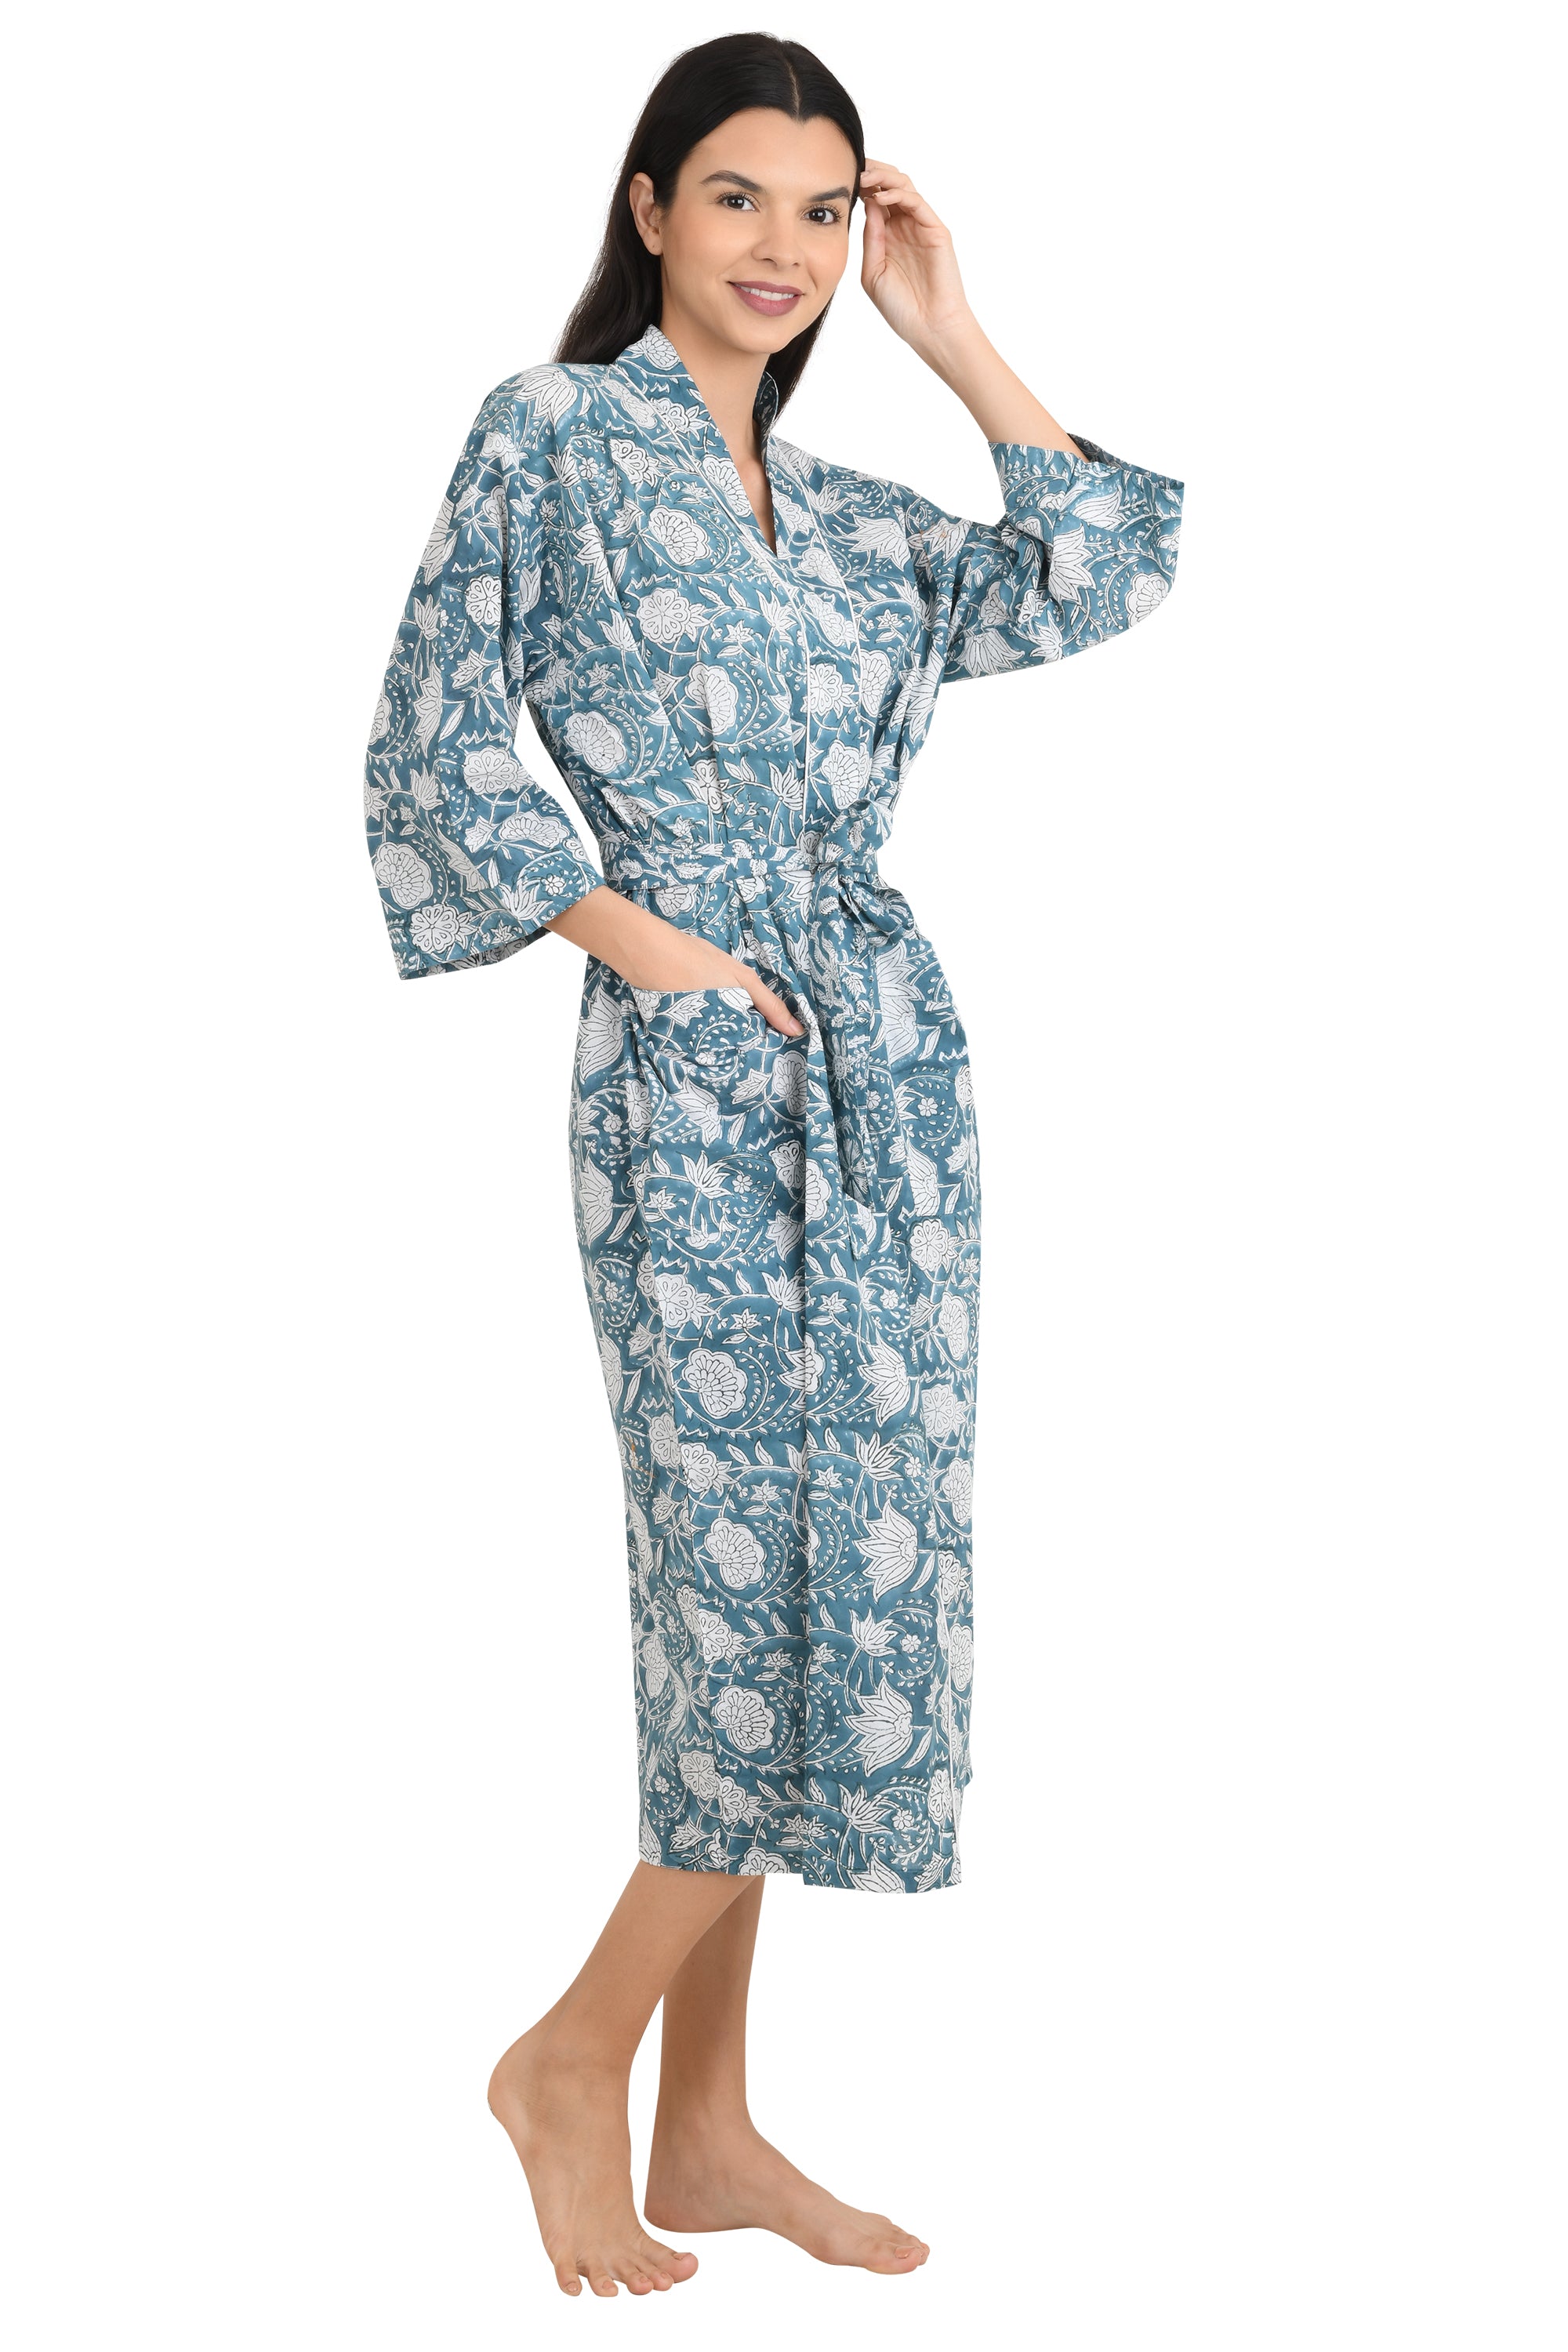 Pure Cotton Kimono Indian Handprinted Boho House Robe Summer Dress | Grey White Floral Print | Beach Cover Up Wear | Christmas Present